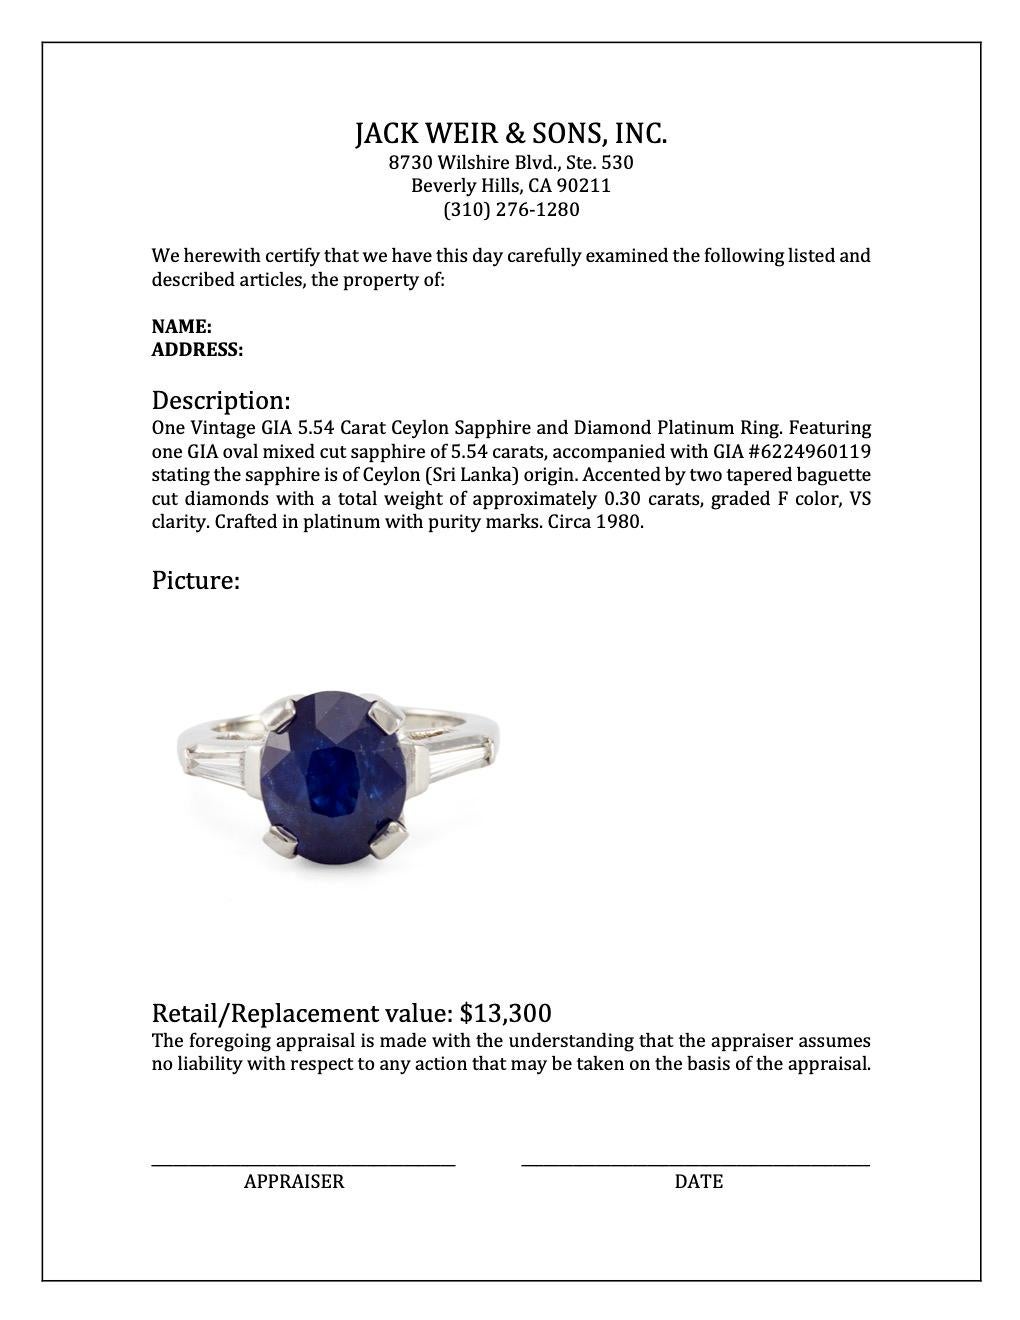 Vintage GIA 5.54 Carat Ceylon Sapphire and Diamond Platinum Ring 2